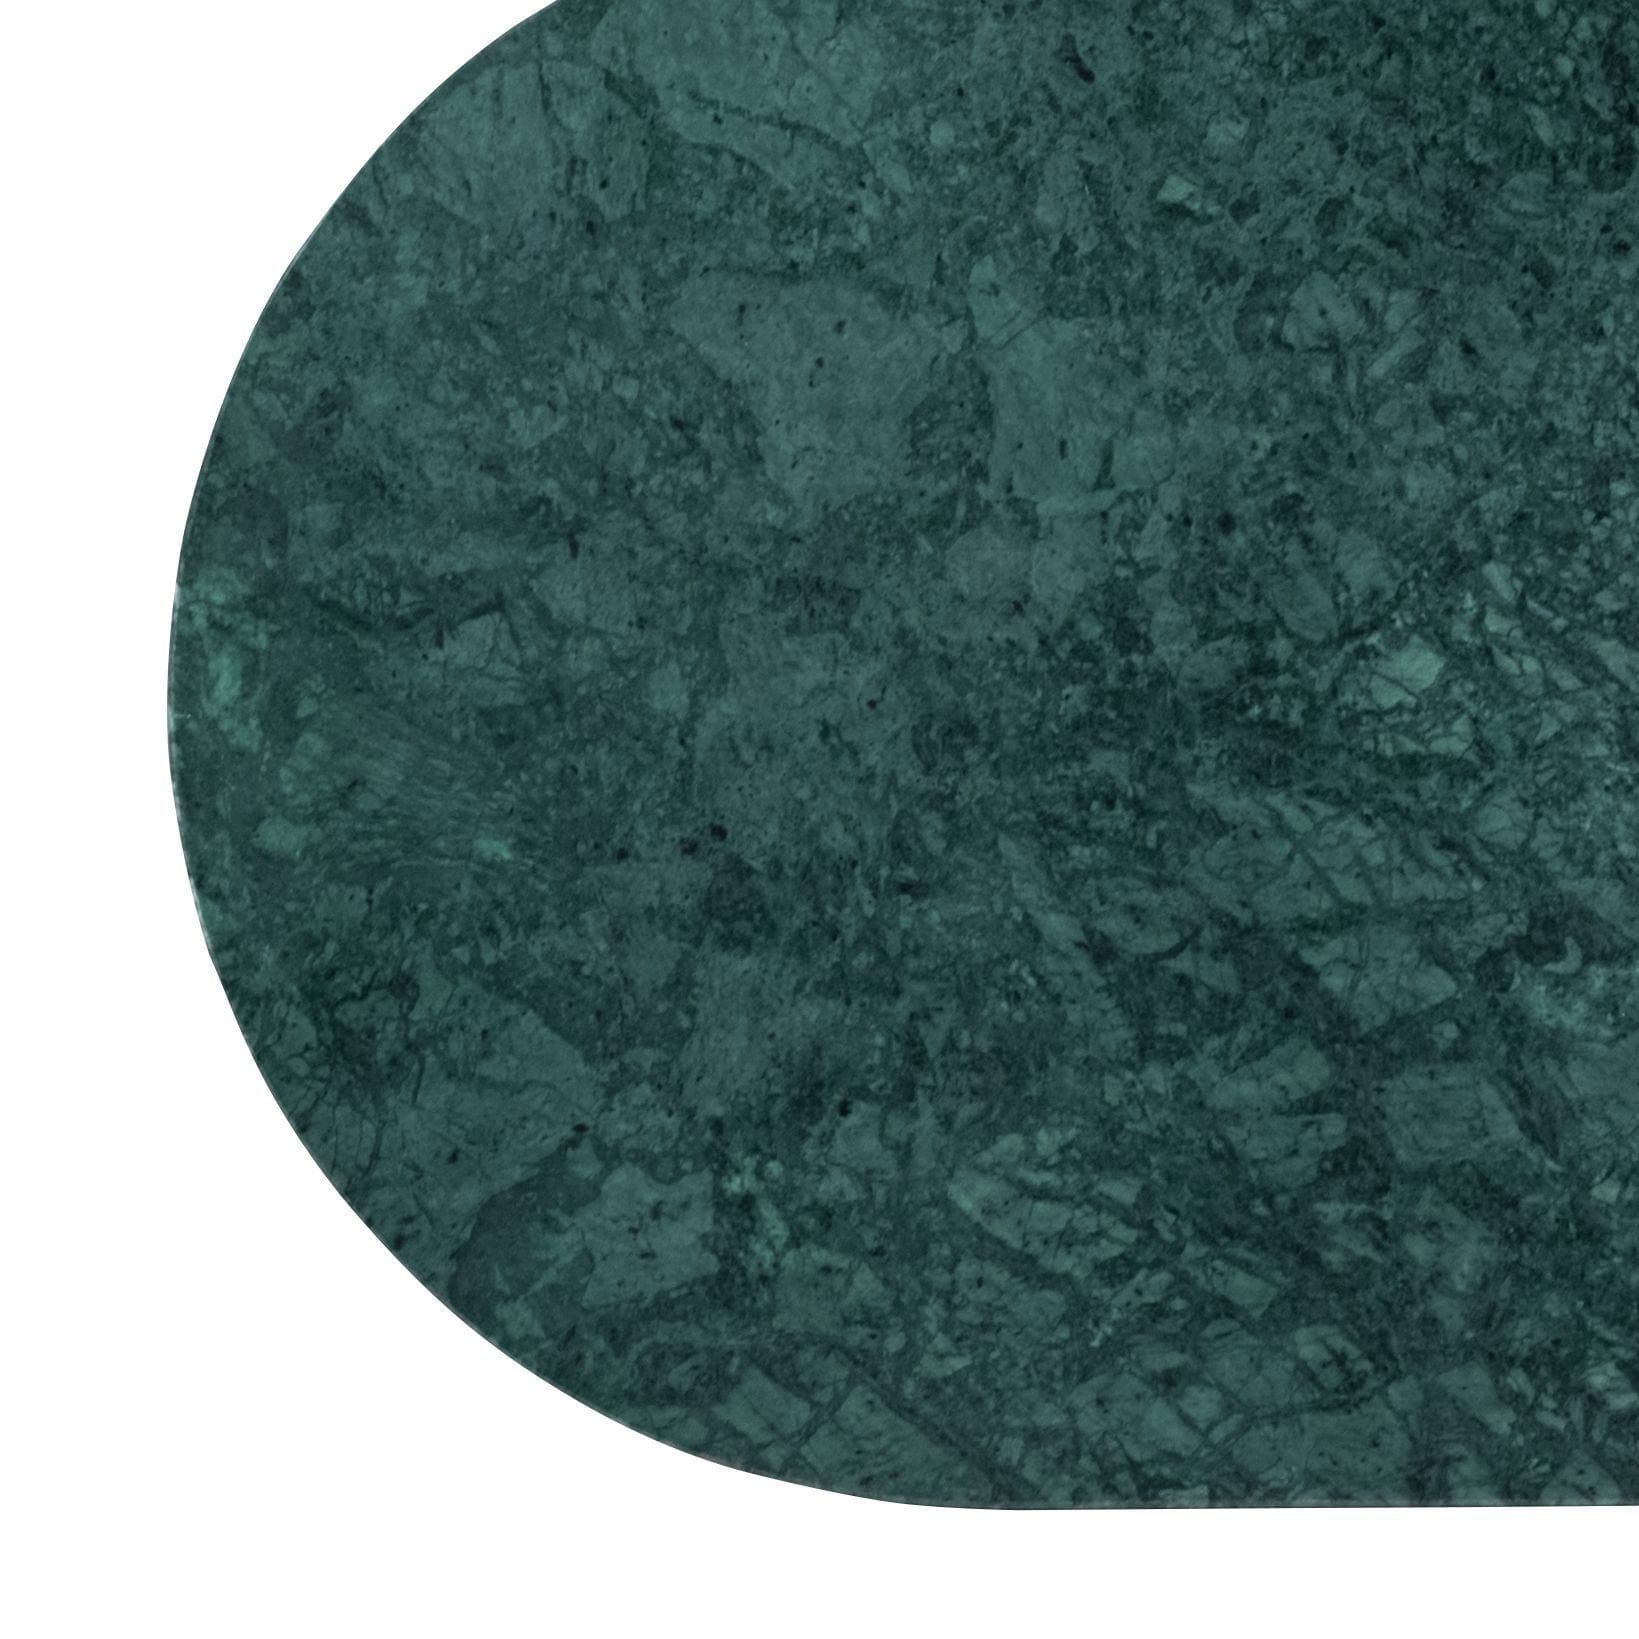 Hübsch Nusa Table Metal / Marble Green